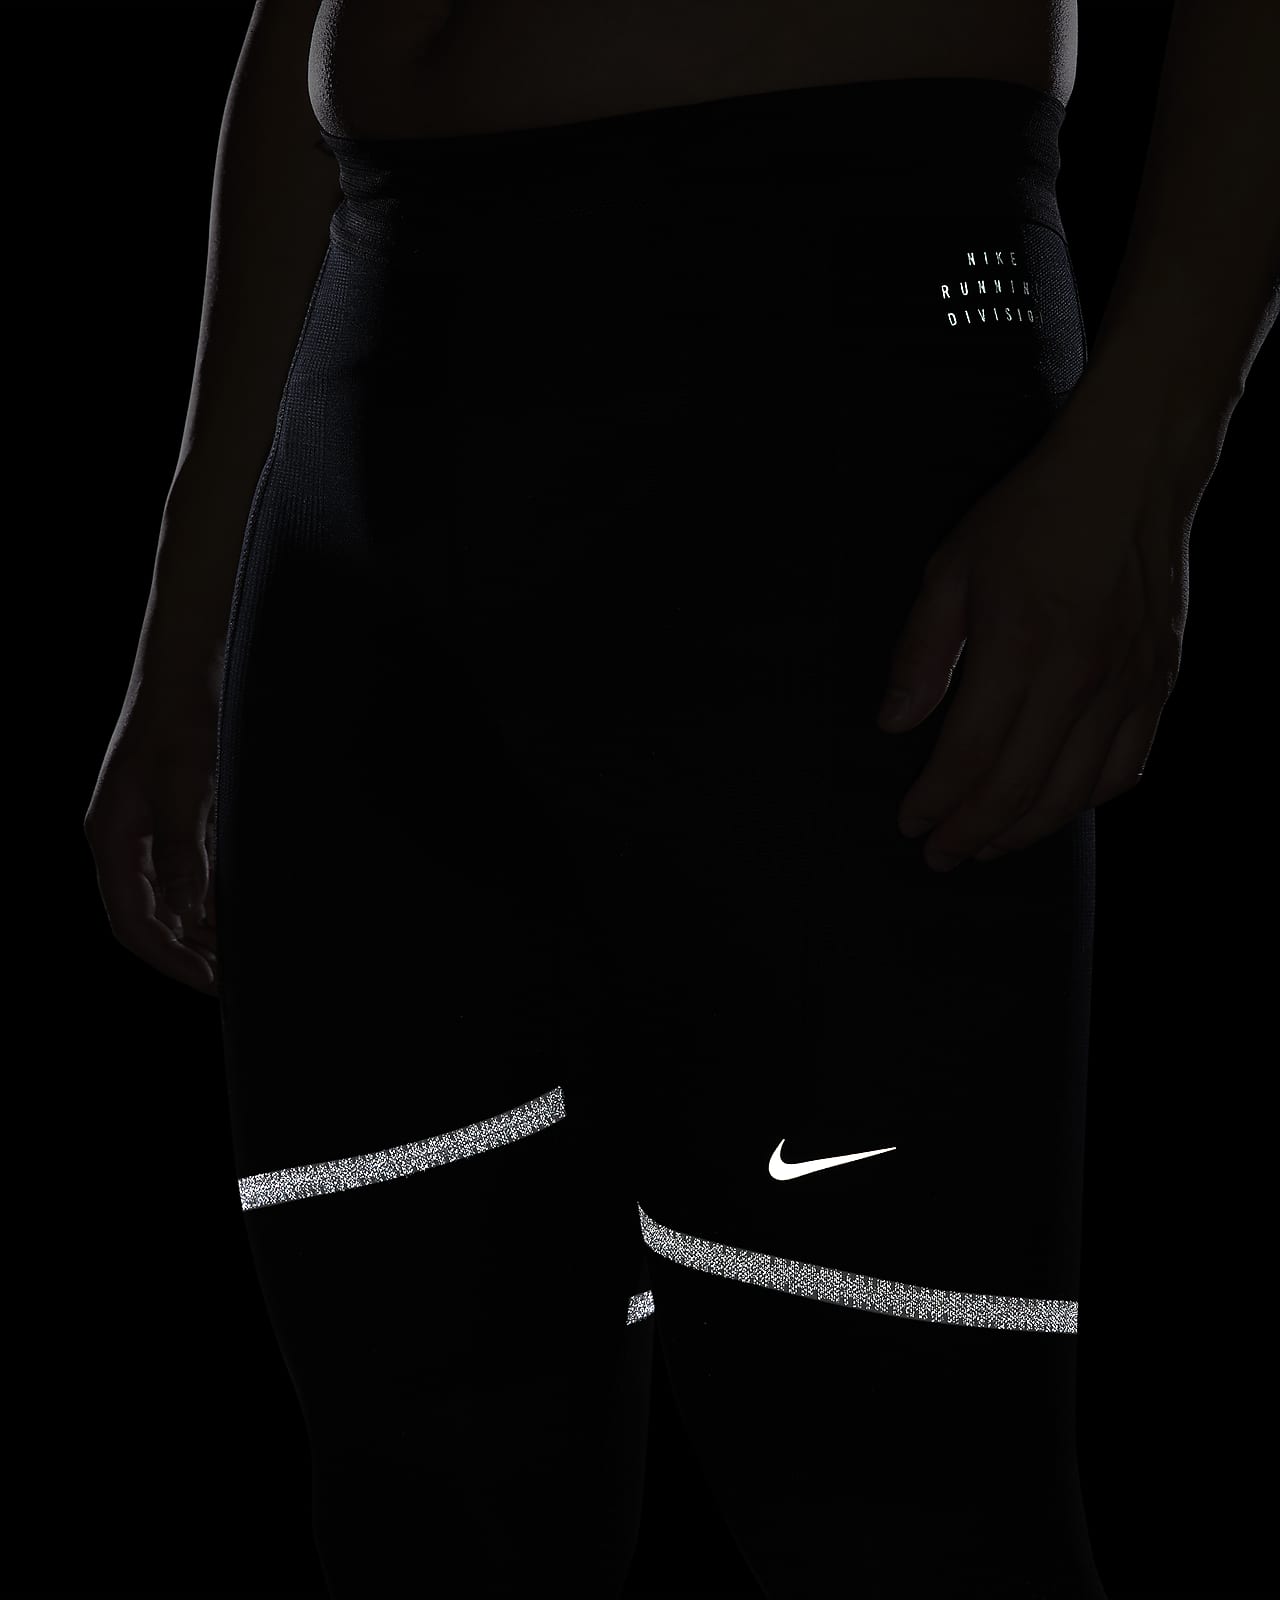 Nike Dri-Fit Running Tights Men's Black New with Tags 3XL 36